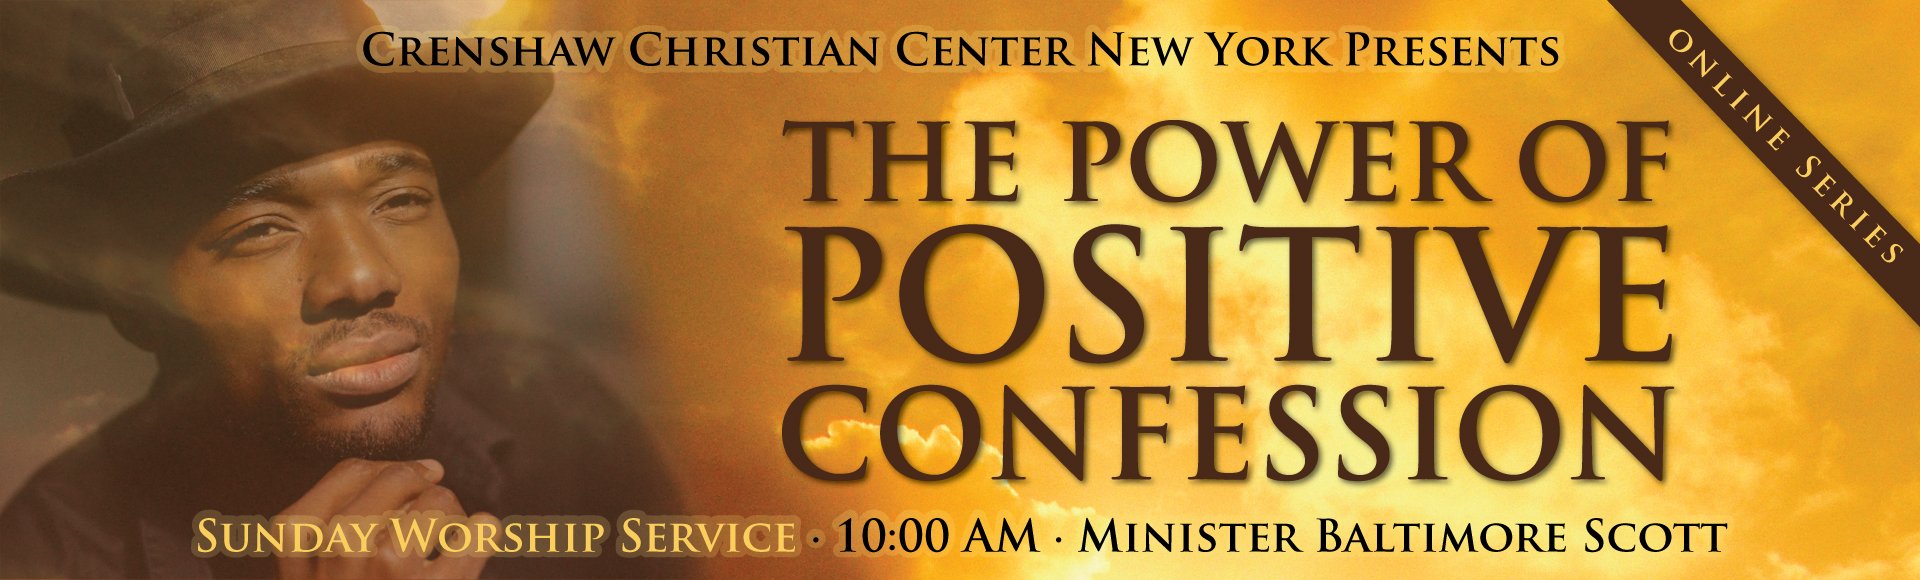 CCCNY_Power of Positive Confession_Slide-Banner_022224-01.jpg